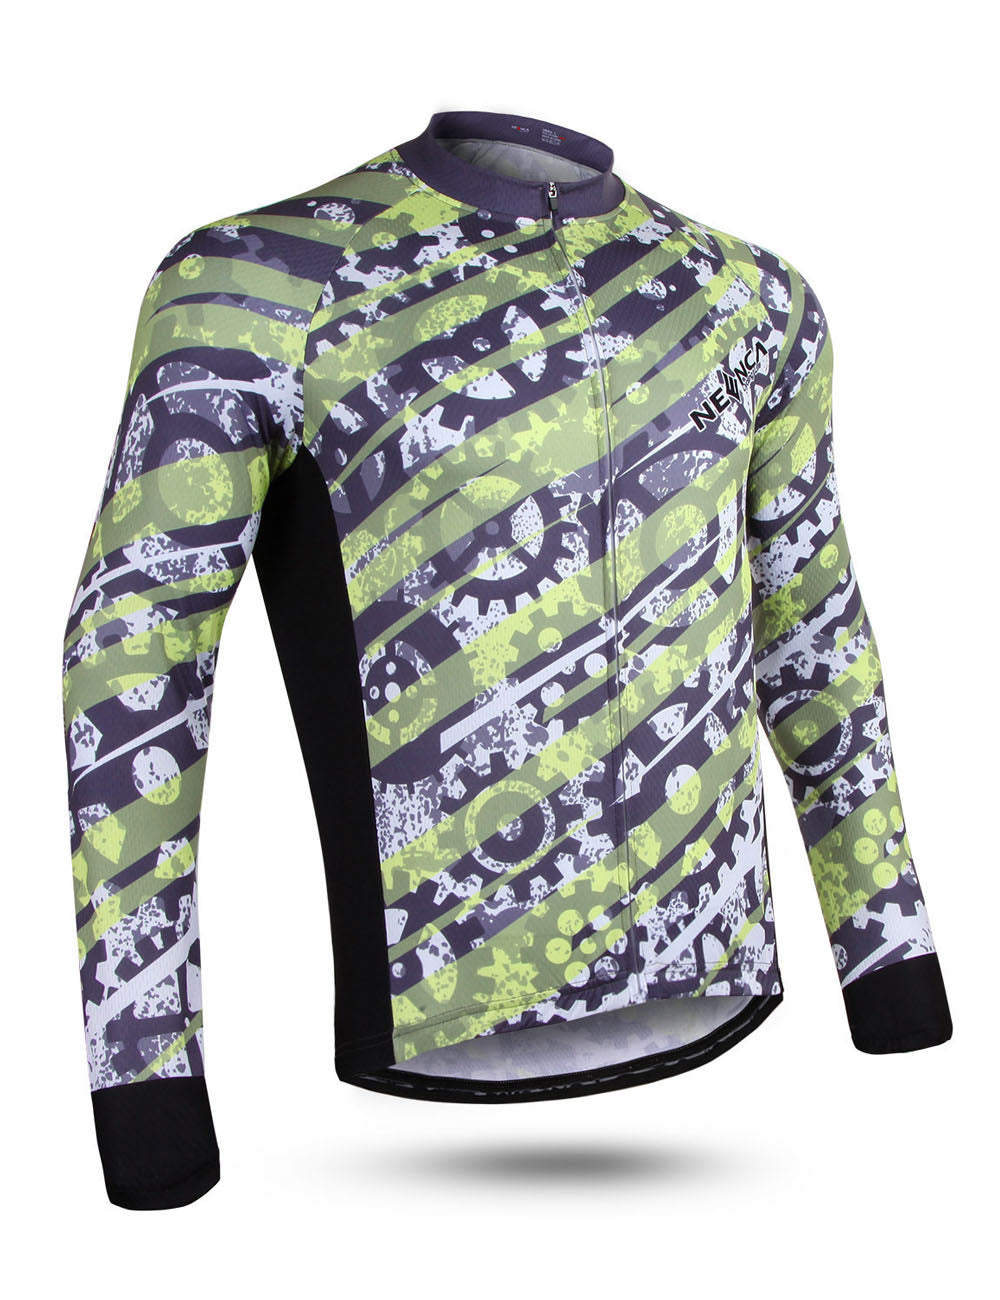 Neenca Men's Cycling Bike Jersey Long Sleeve With 3 Rear Pockets